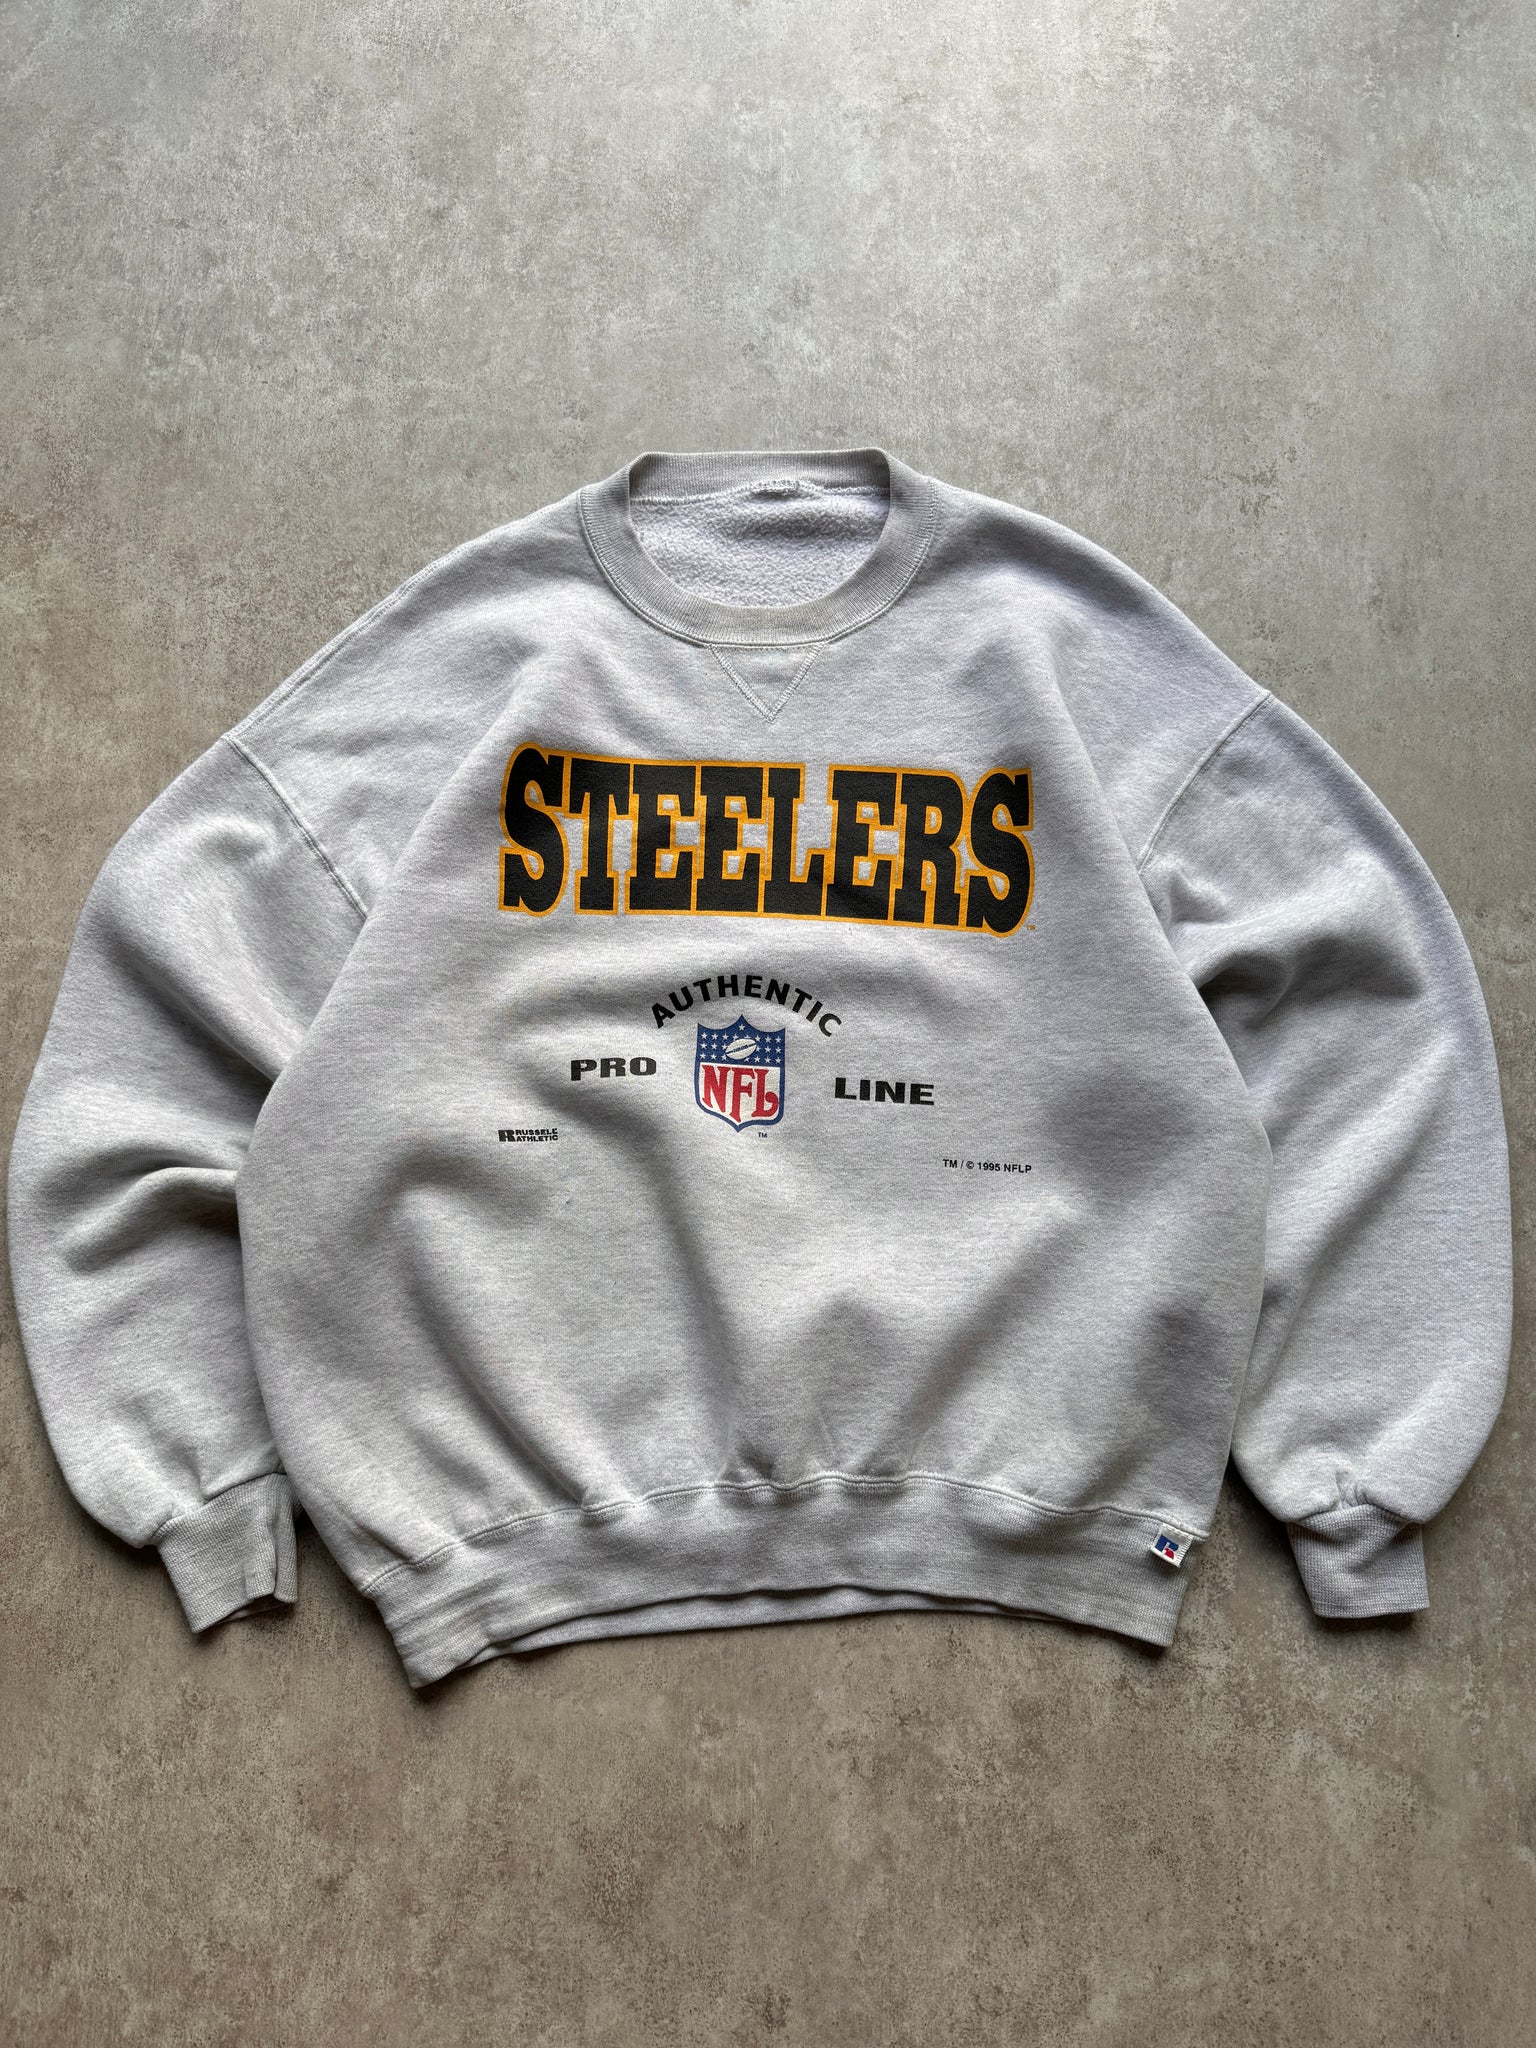 Vintage Pittsburgh Steelers Pro Line Sweatshirt (XL)